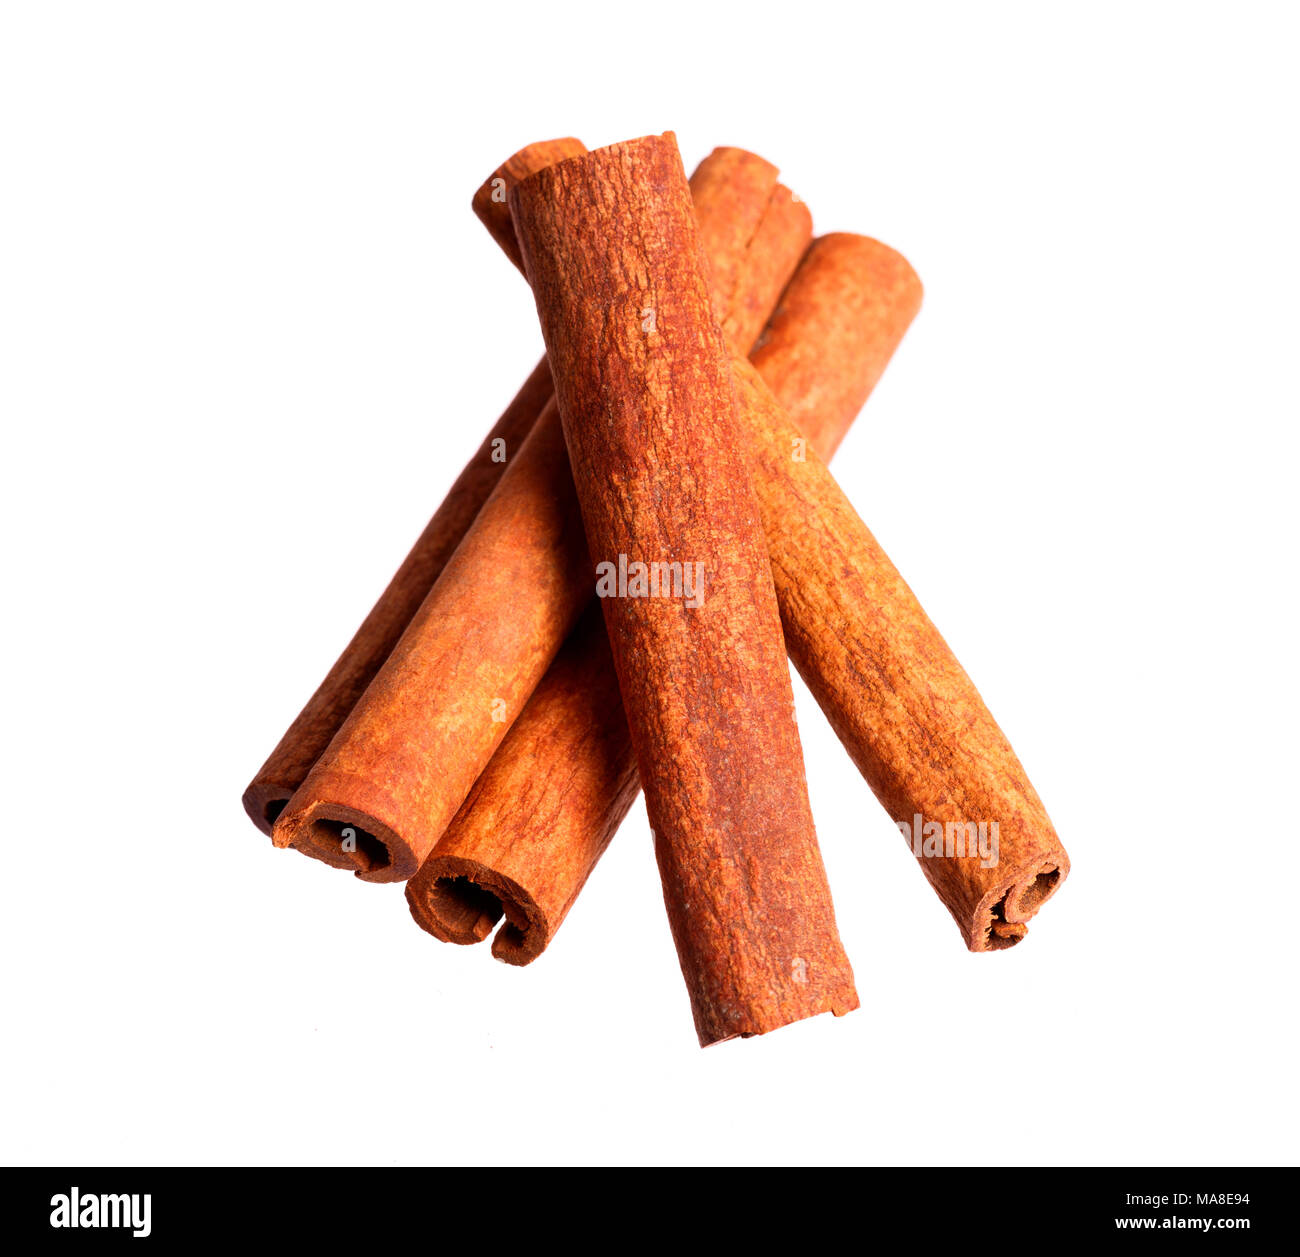 Cinnamon bark on a white background. Stock Photo